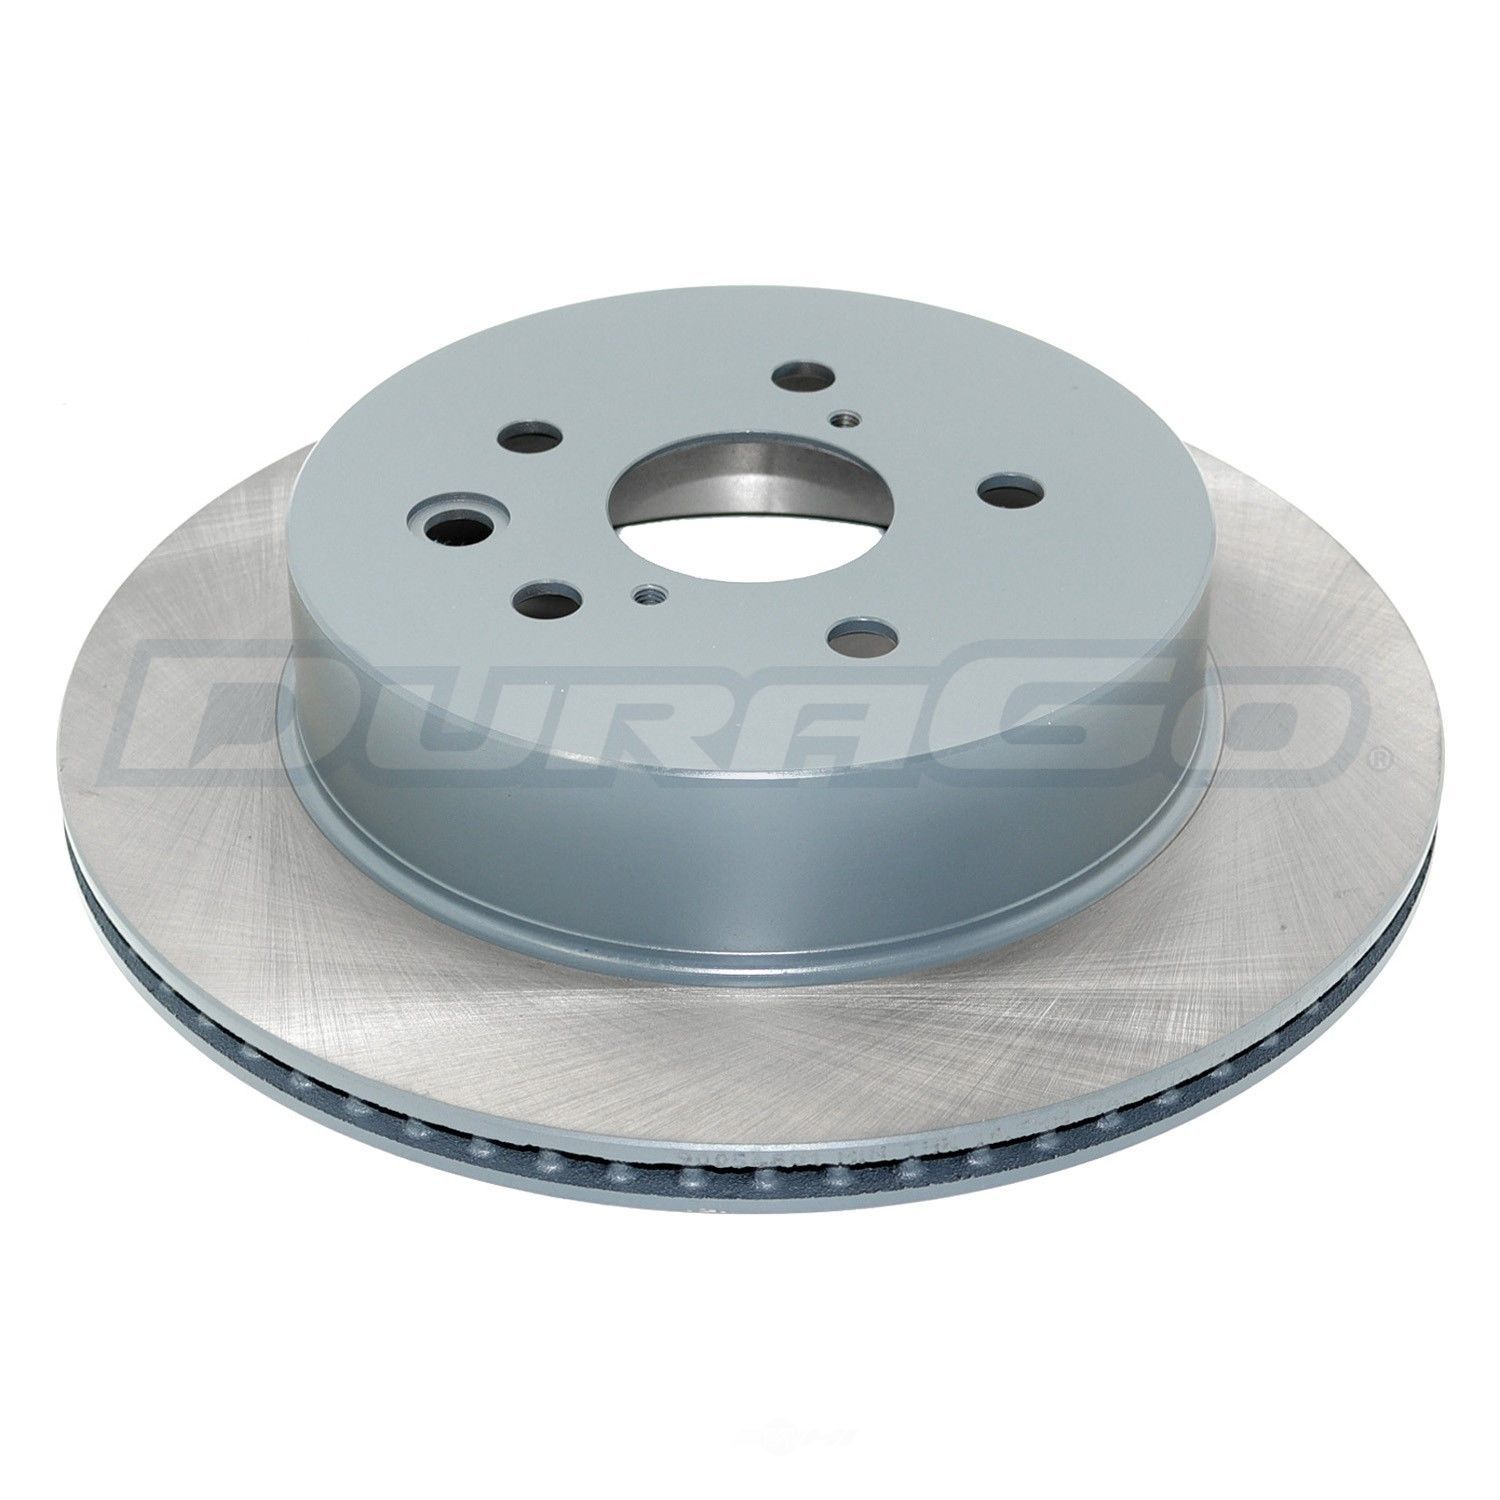 DURAGO TITANIUM SERIES  DTS - Disc Brake Rotor (Rear) - DTS BR900548-01